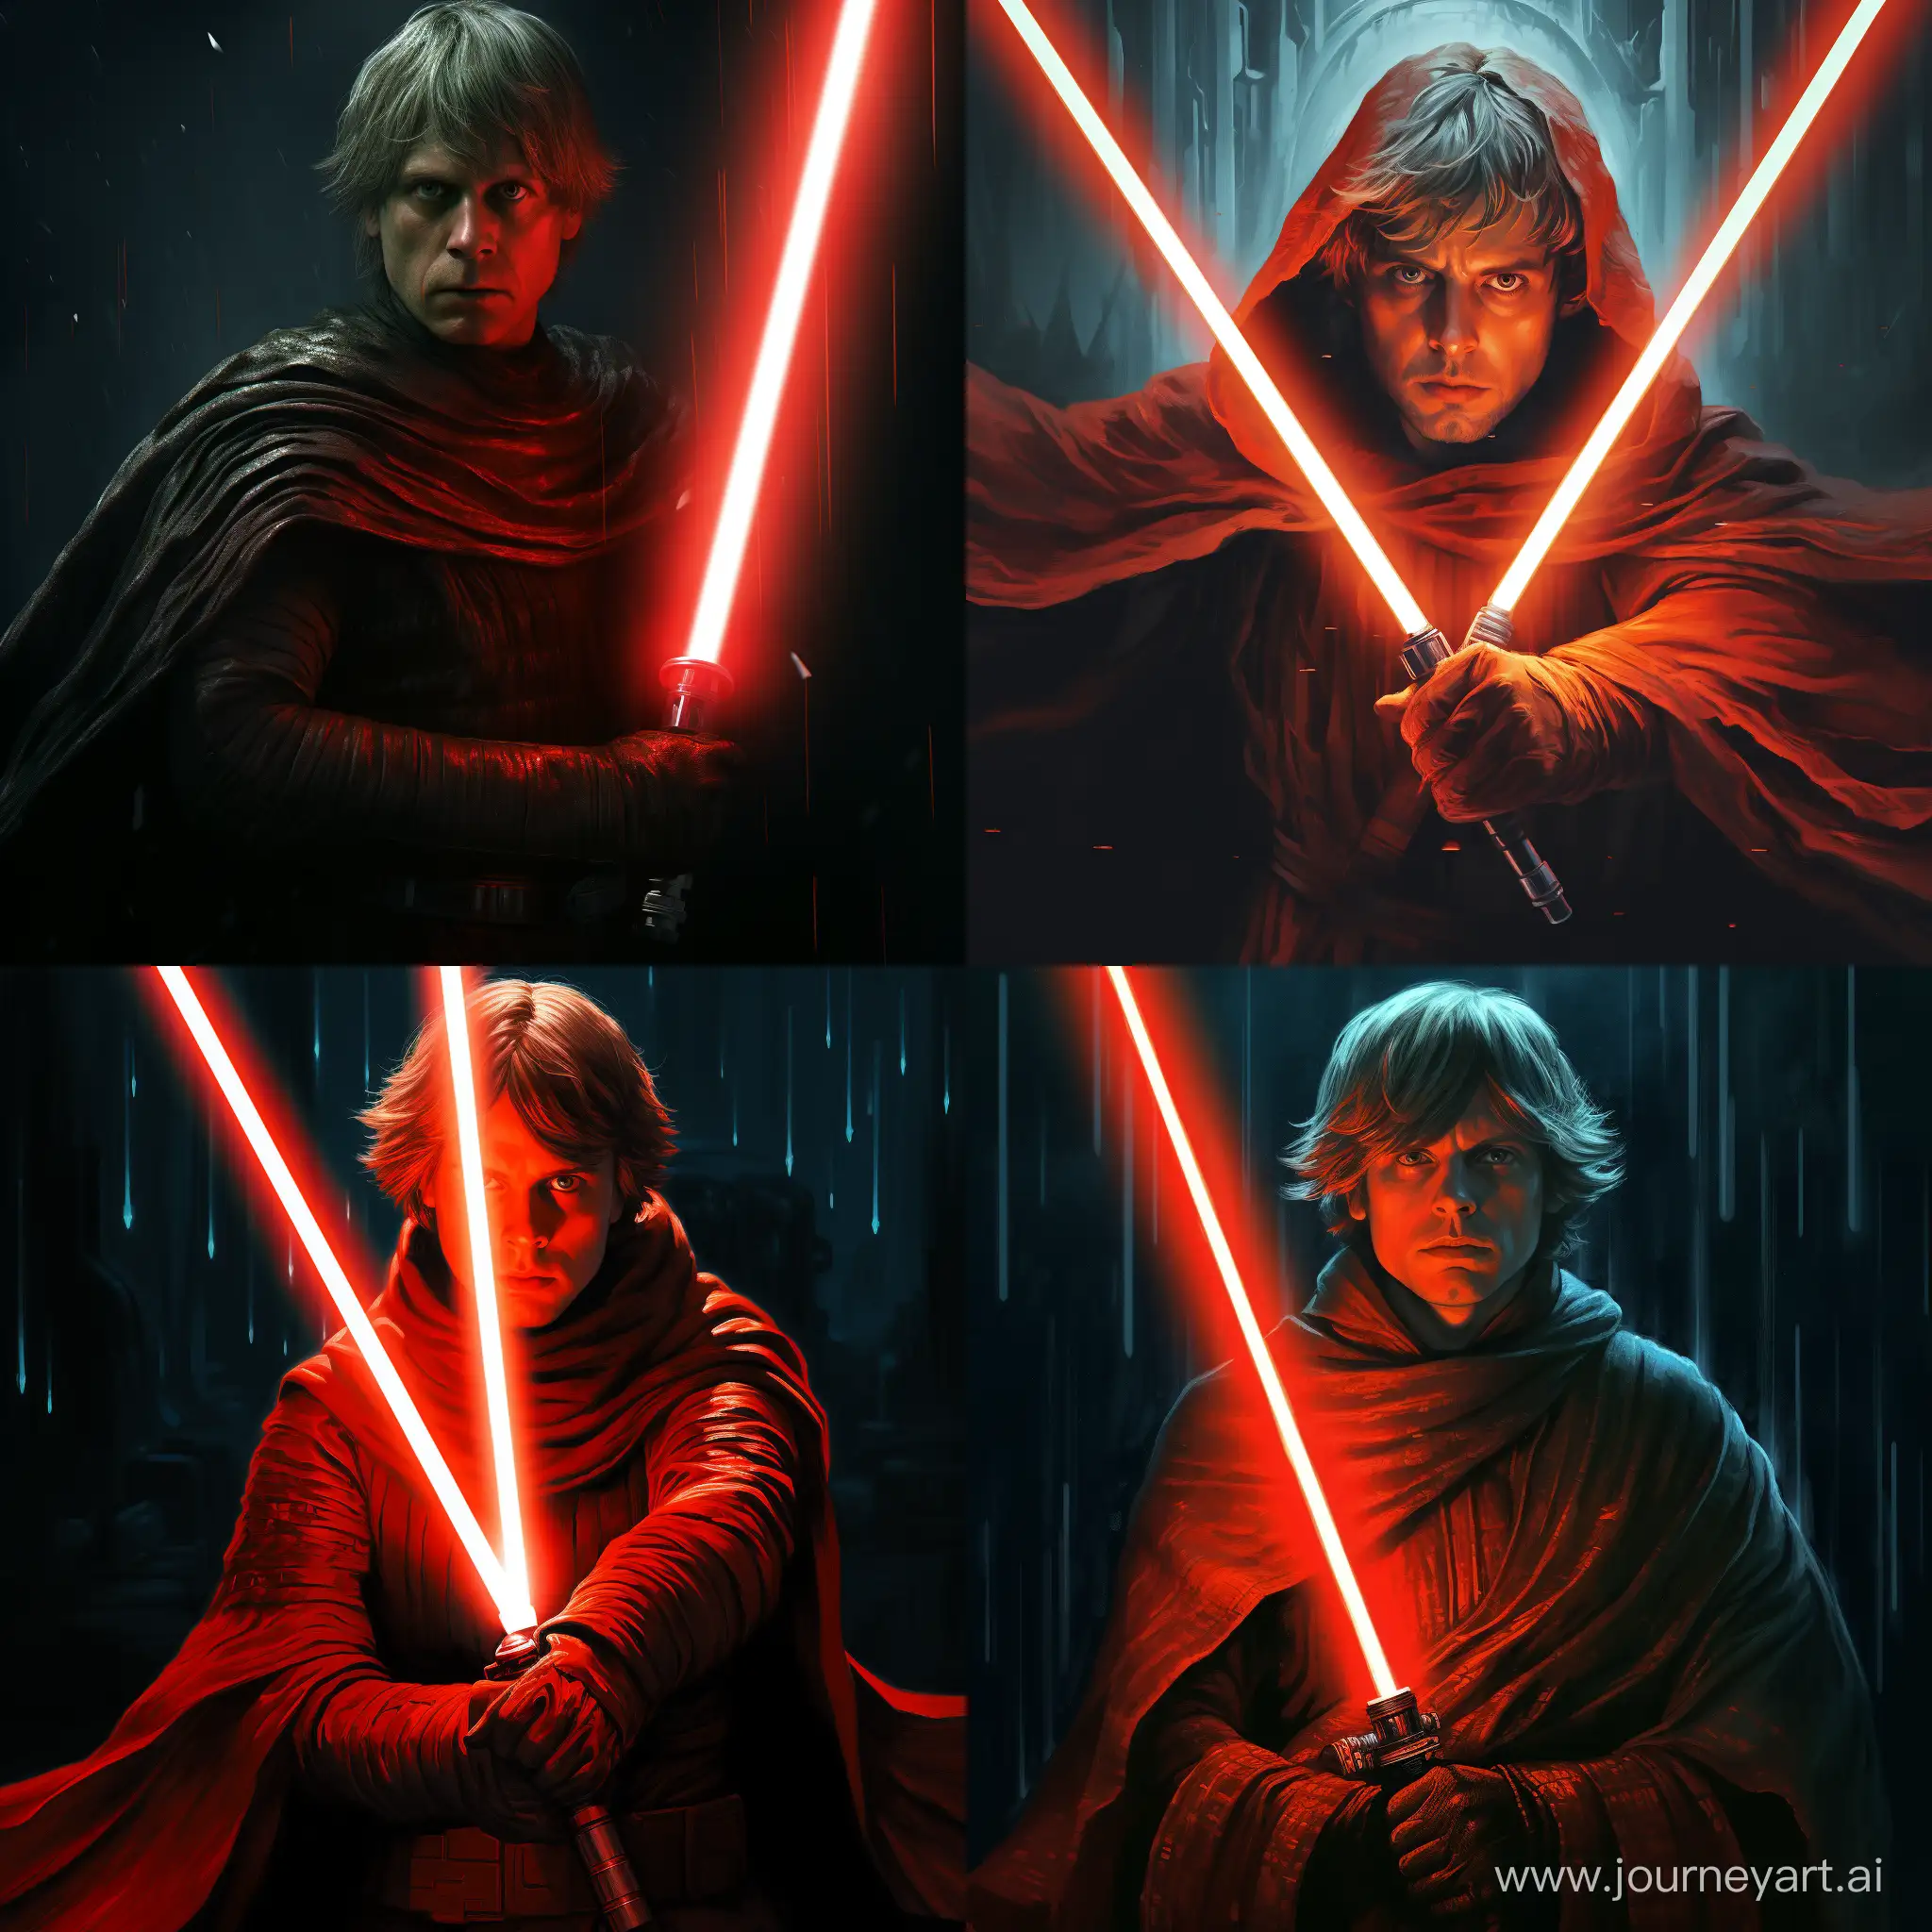 Luke-Skywalker-with-Red-Lightsaber-in-Star-Wars-Scene